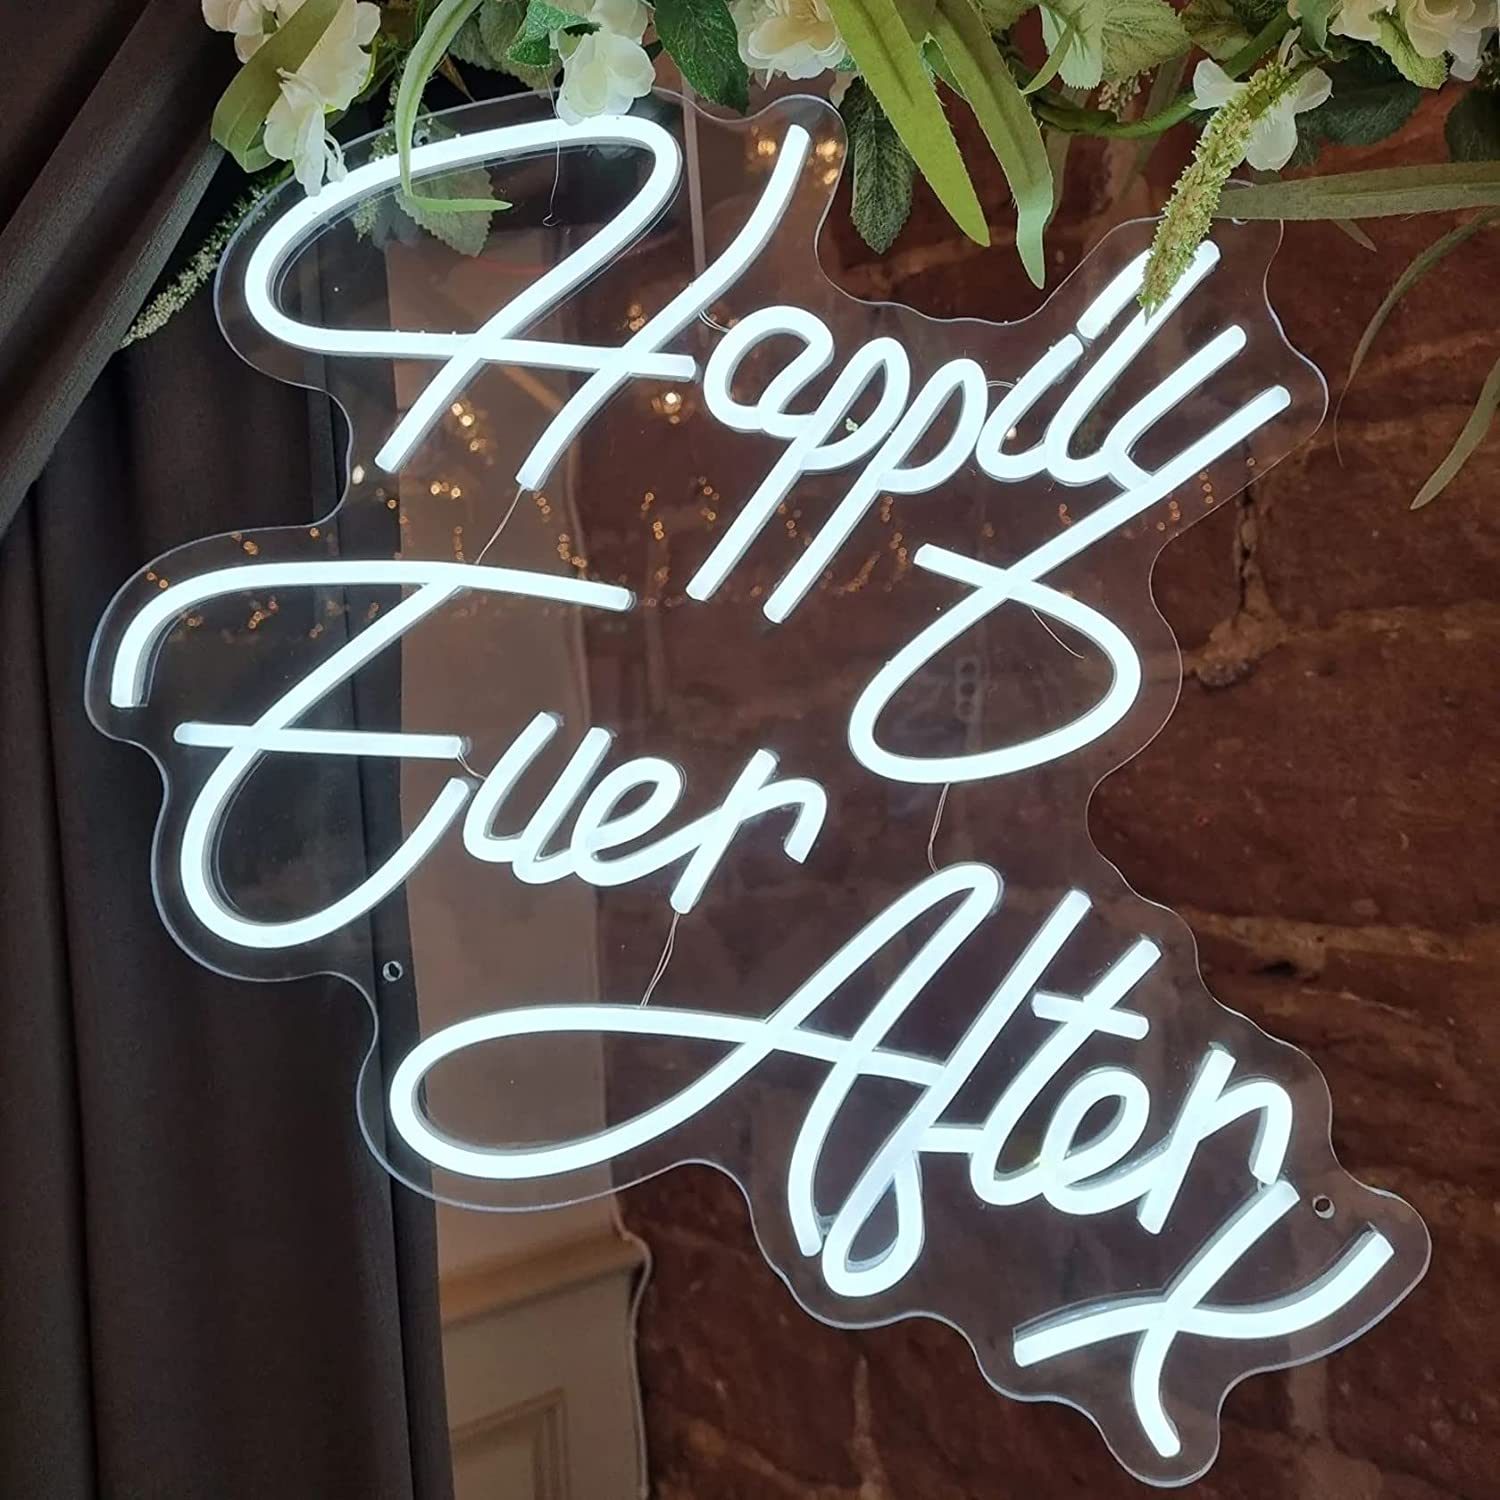 Neon Schild "Happily ever after x" beleuchtet warm weiss [mieten]